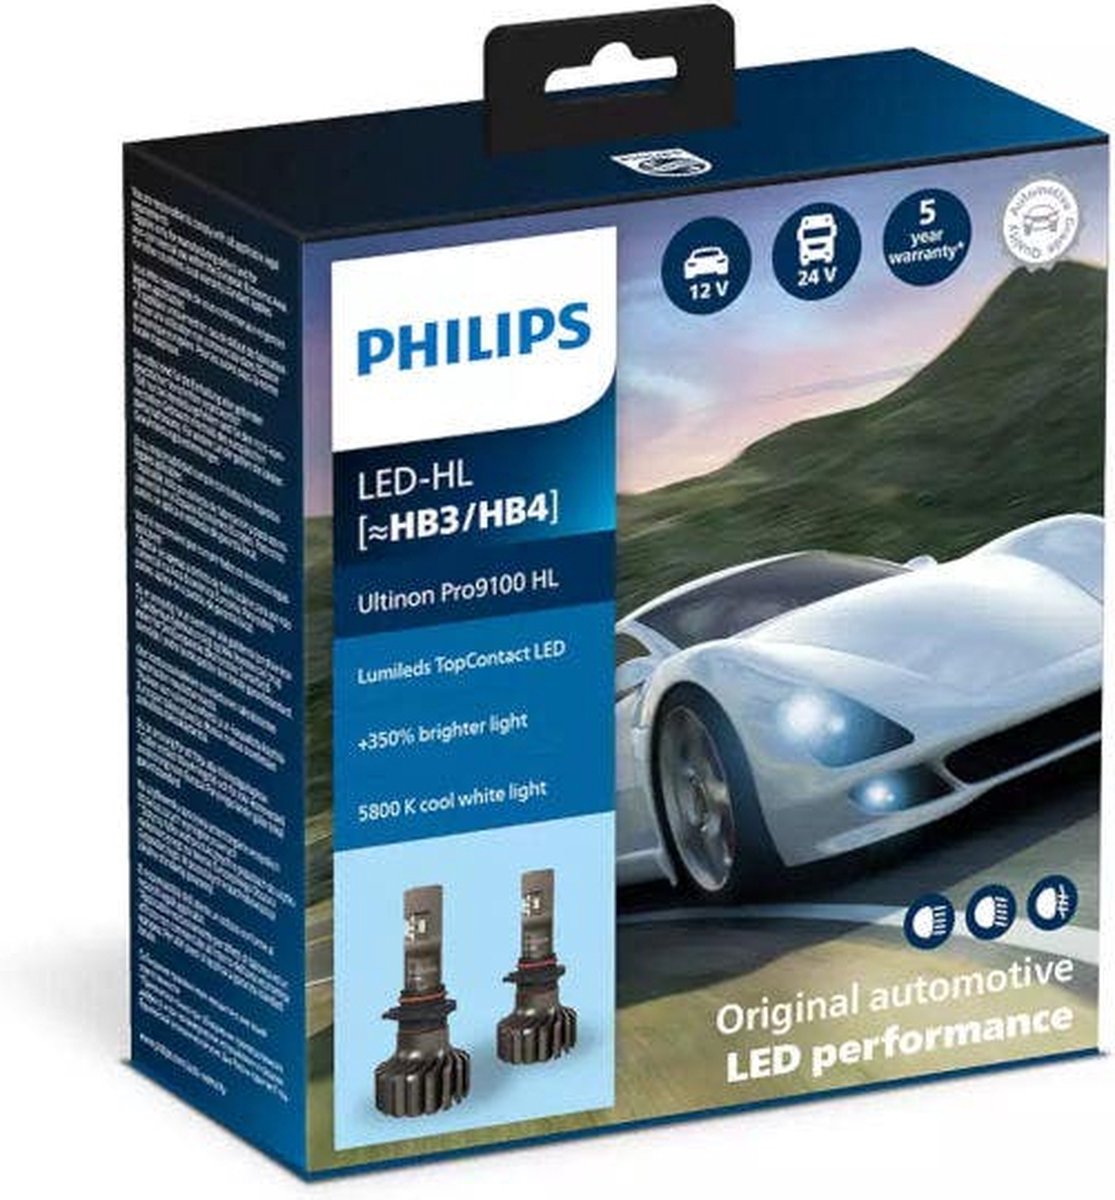 Philips Ultinon Pro9100 LED-HL HB3 / HB4 set LUM11005U91X2